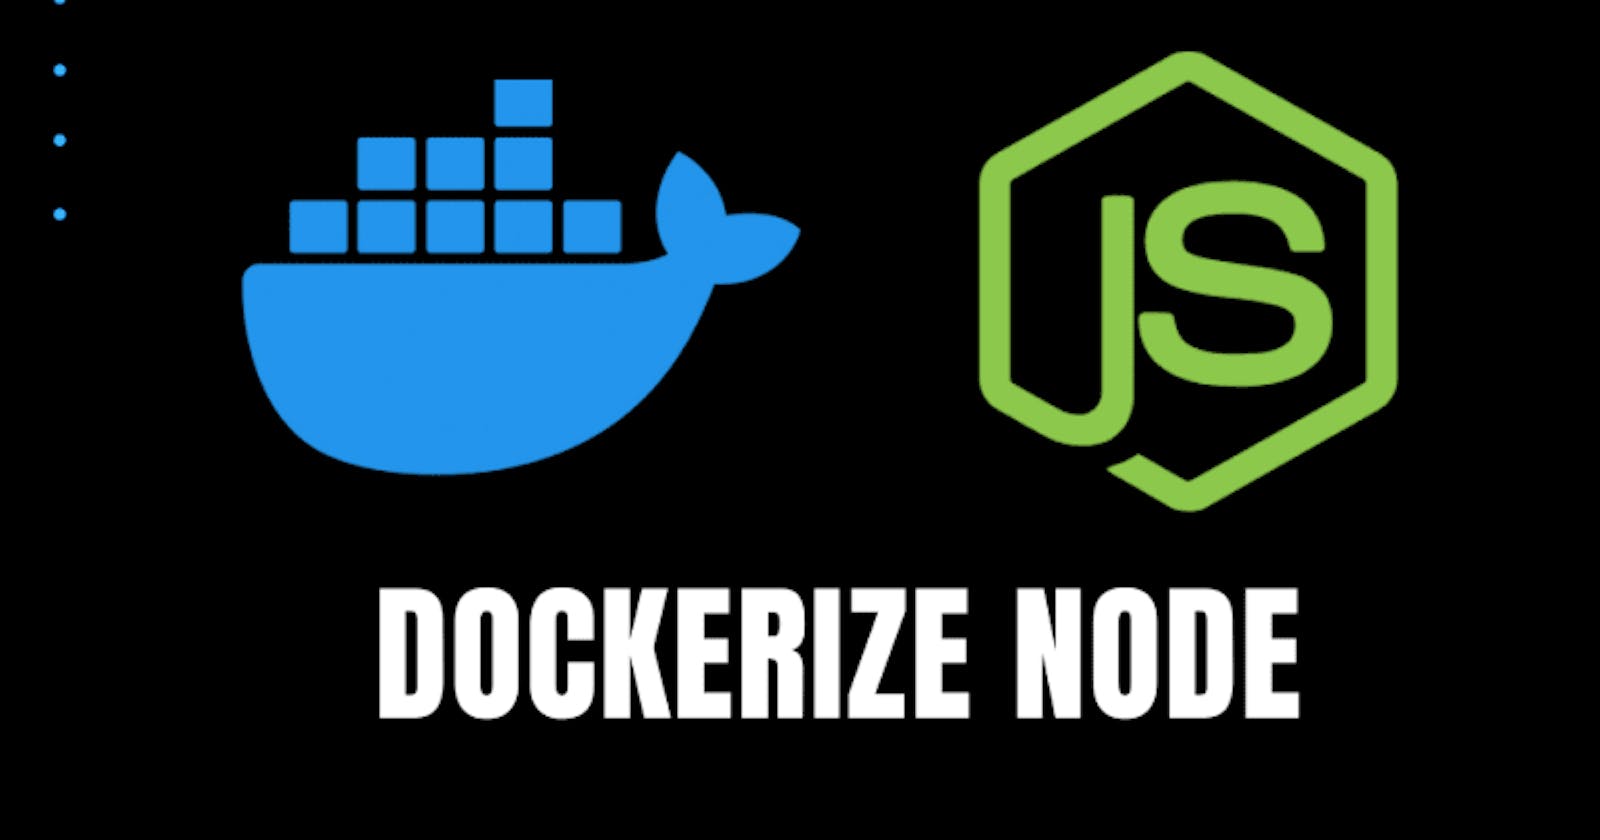 Dockerizing The Node.JS Application